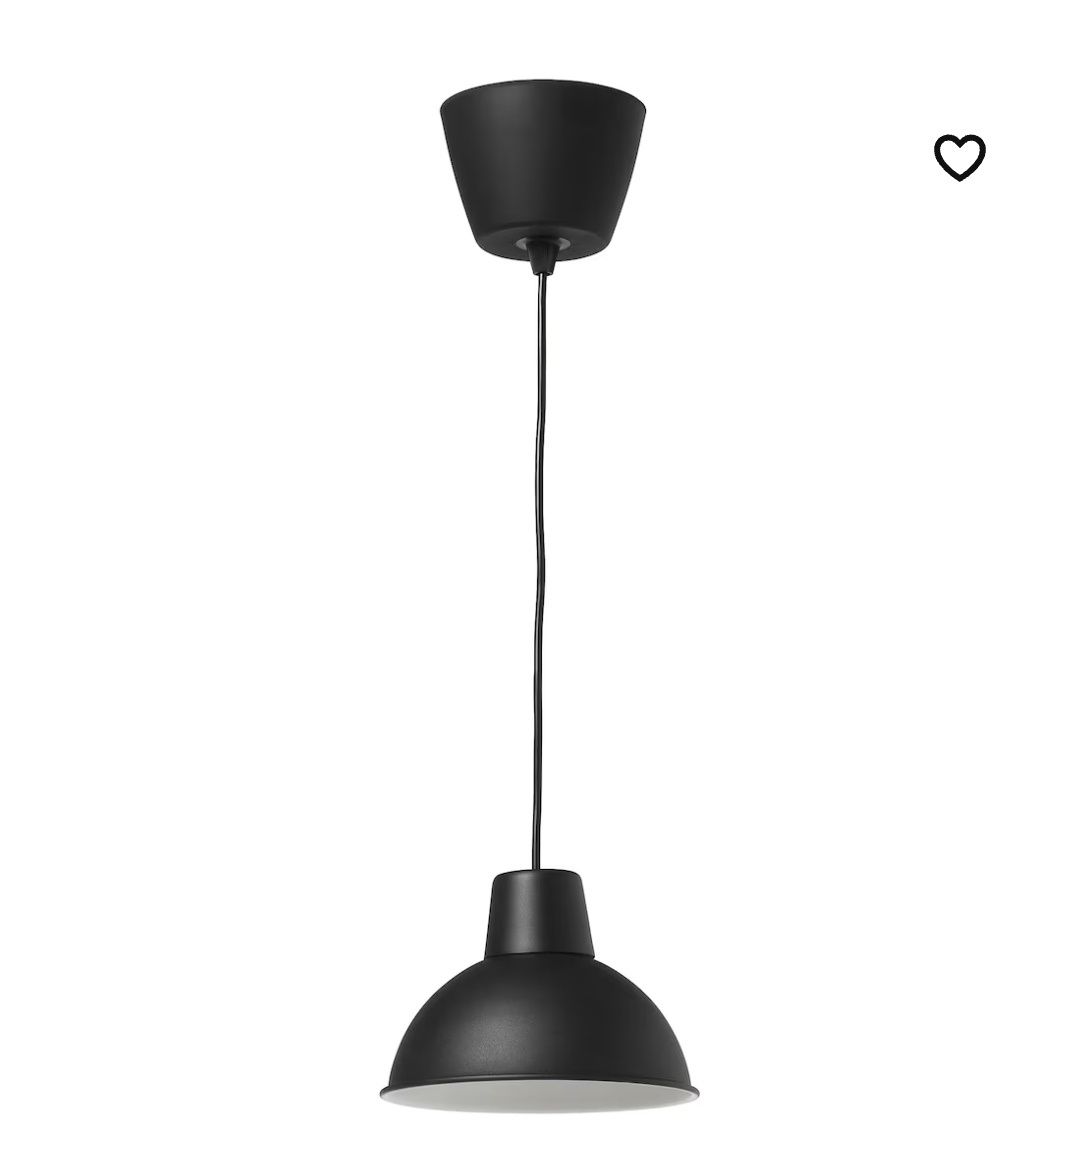 Ikea Skurup lampa wisząca 38cm E27